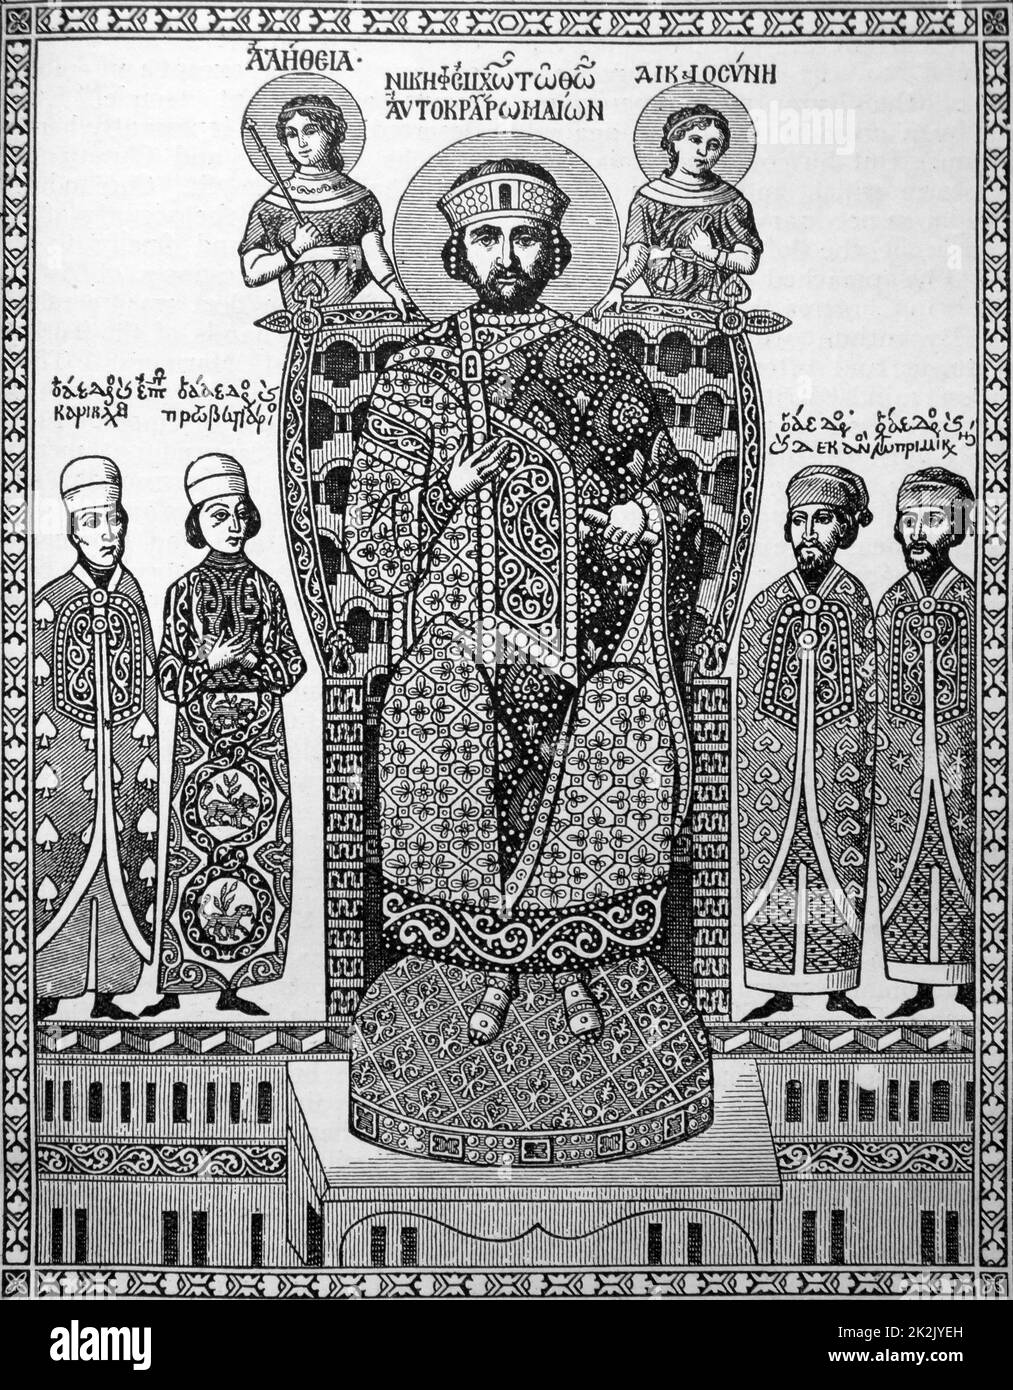 Nikephoros III Botaneiates, (c. 1002 – 1081), Byzantine emperor from 1078 to 1081. He belonged to a family claiming descent from the Byzantine Phokas family Stock Photo